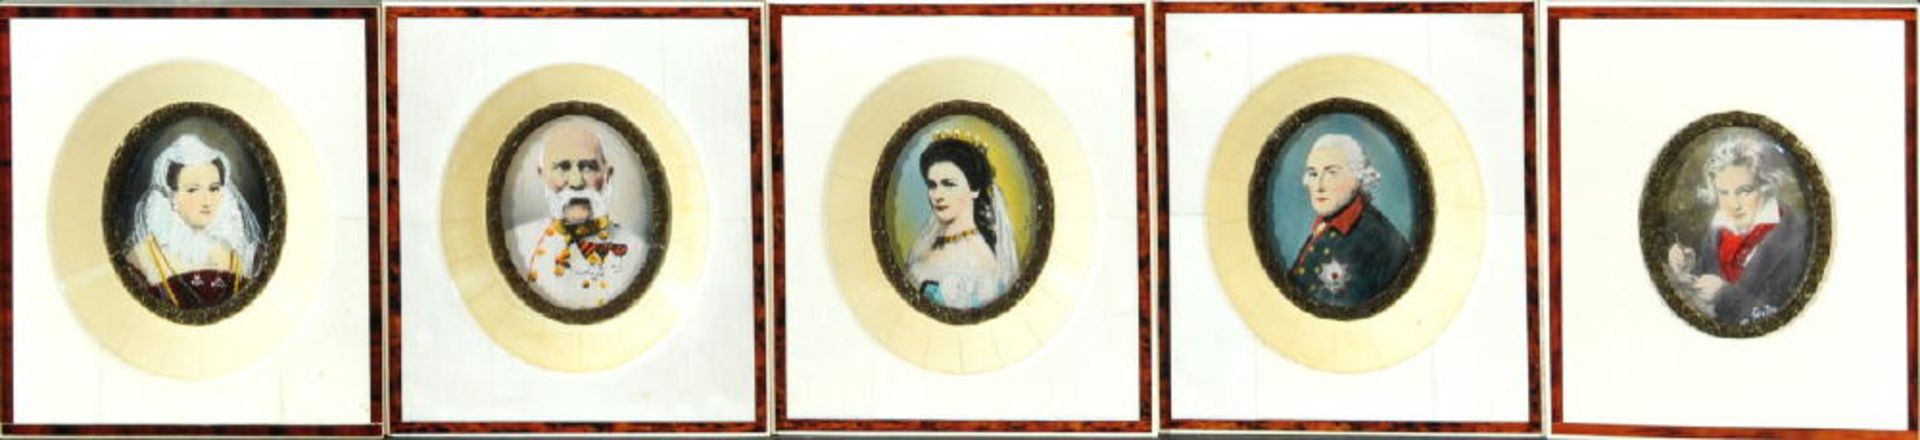 Miniaturmaler des 20. Jh.5 Gouachen-Aquarelle, oval, je ca. 4,5 x 3,5 cm, " Berühmte